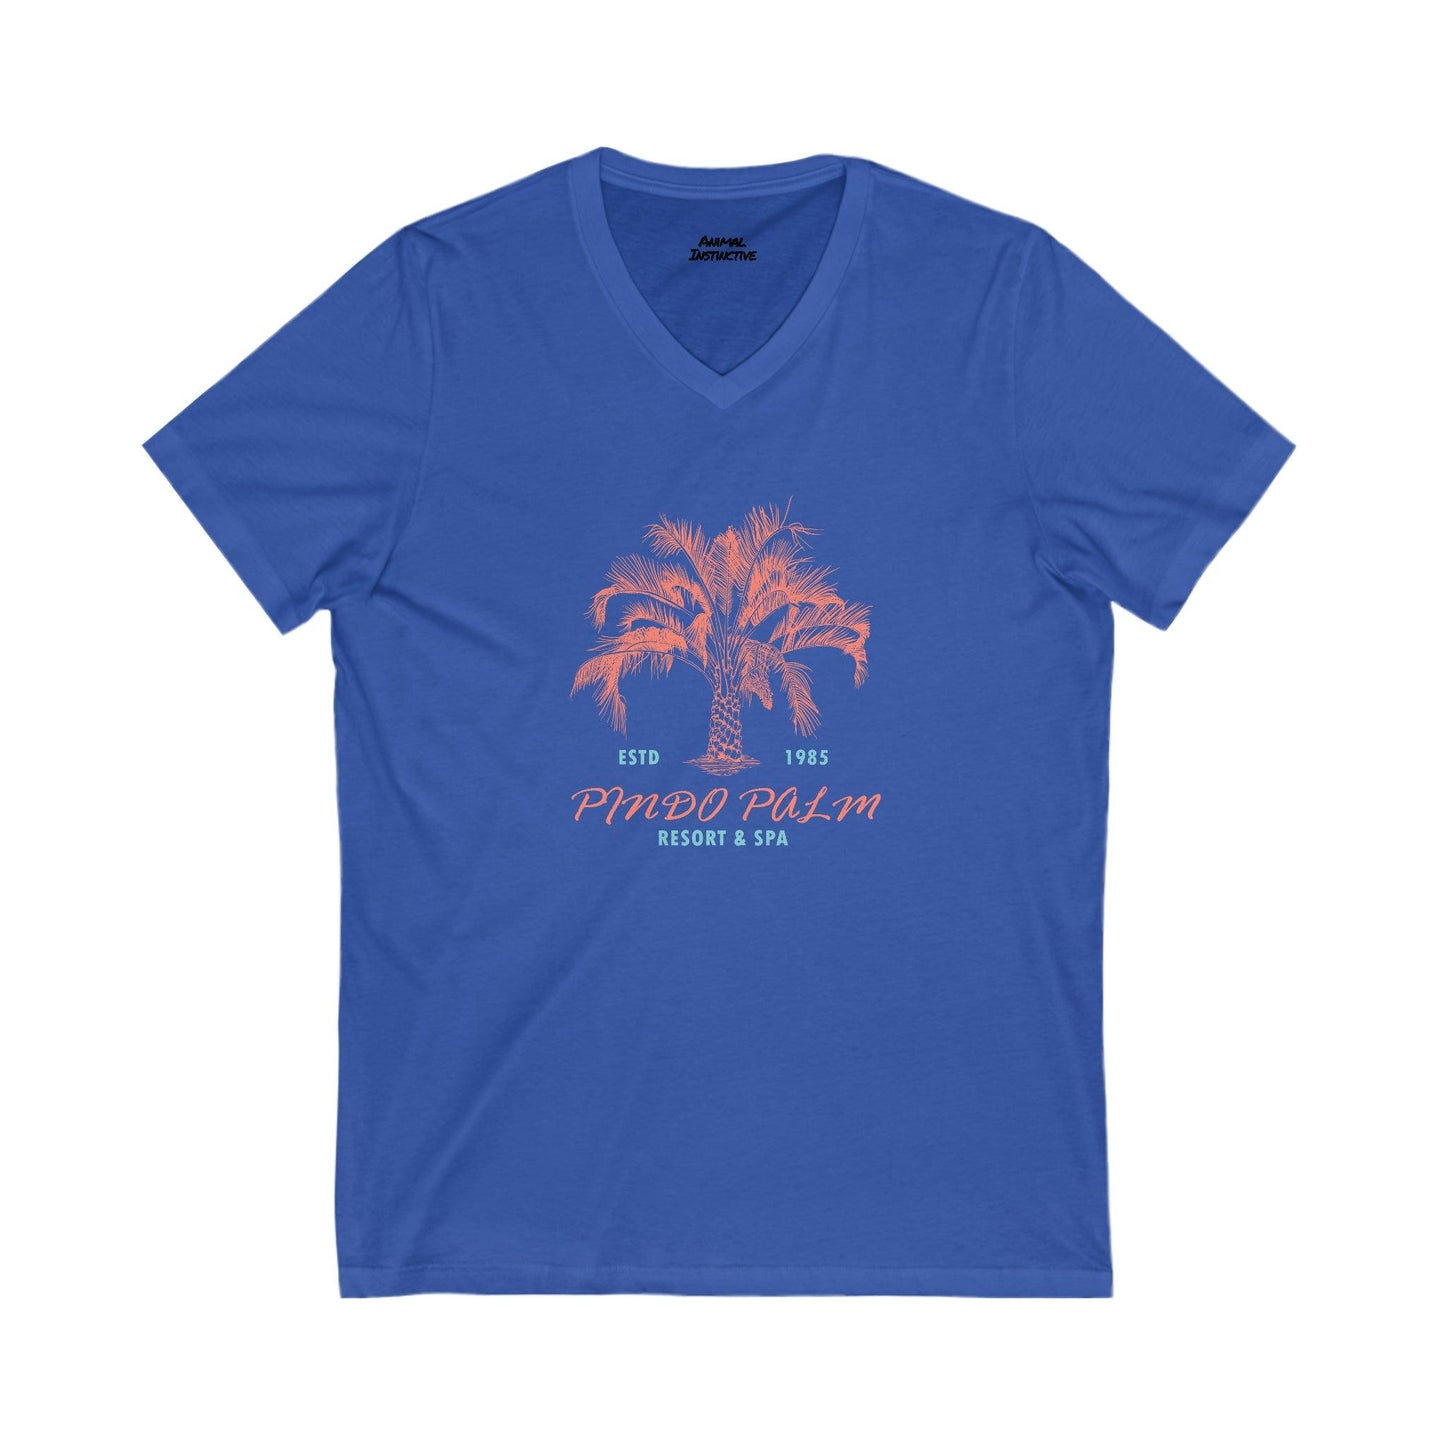 pindo palm resort & spa on a v-neck blue t-shirt